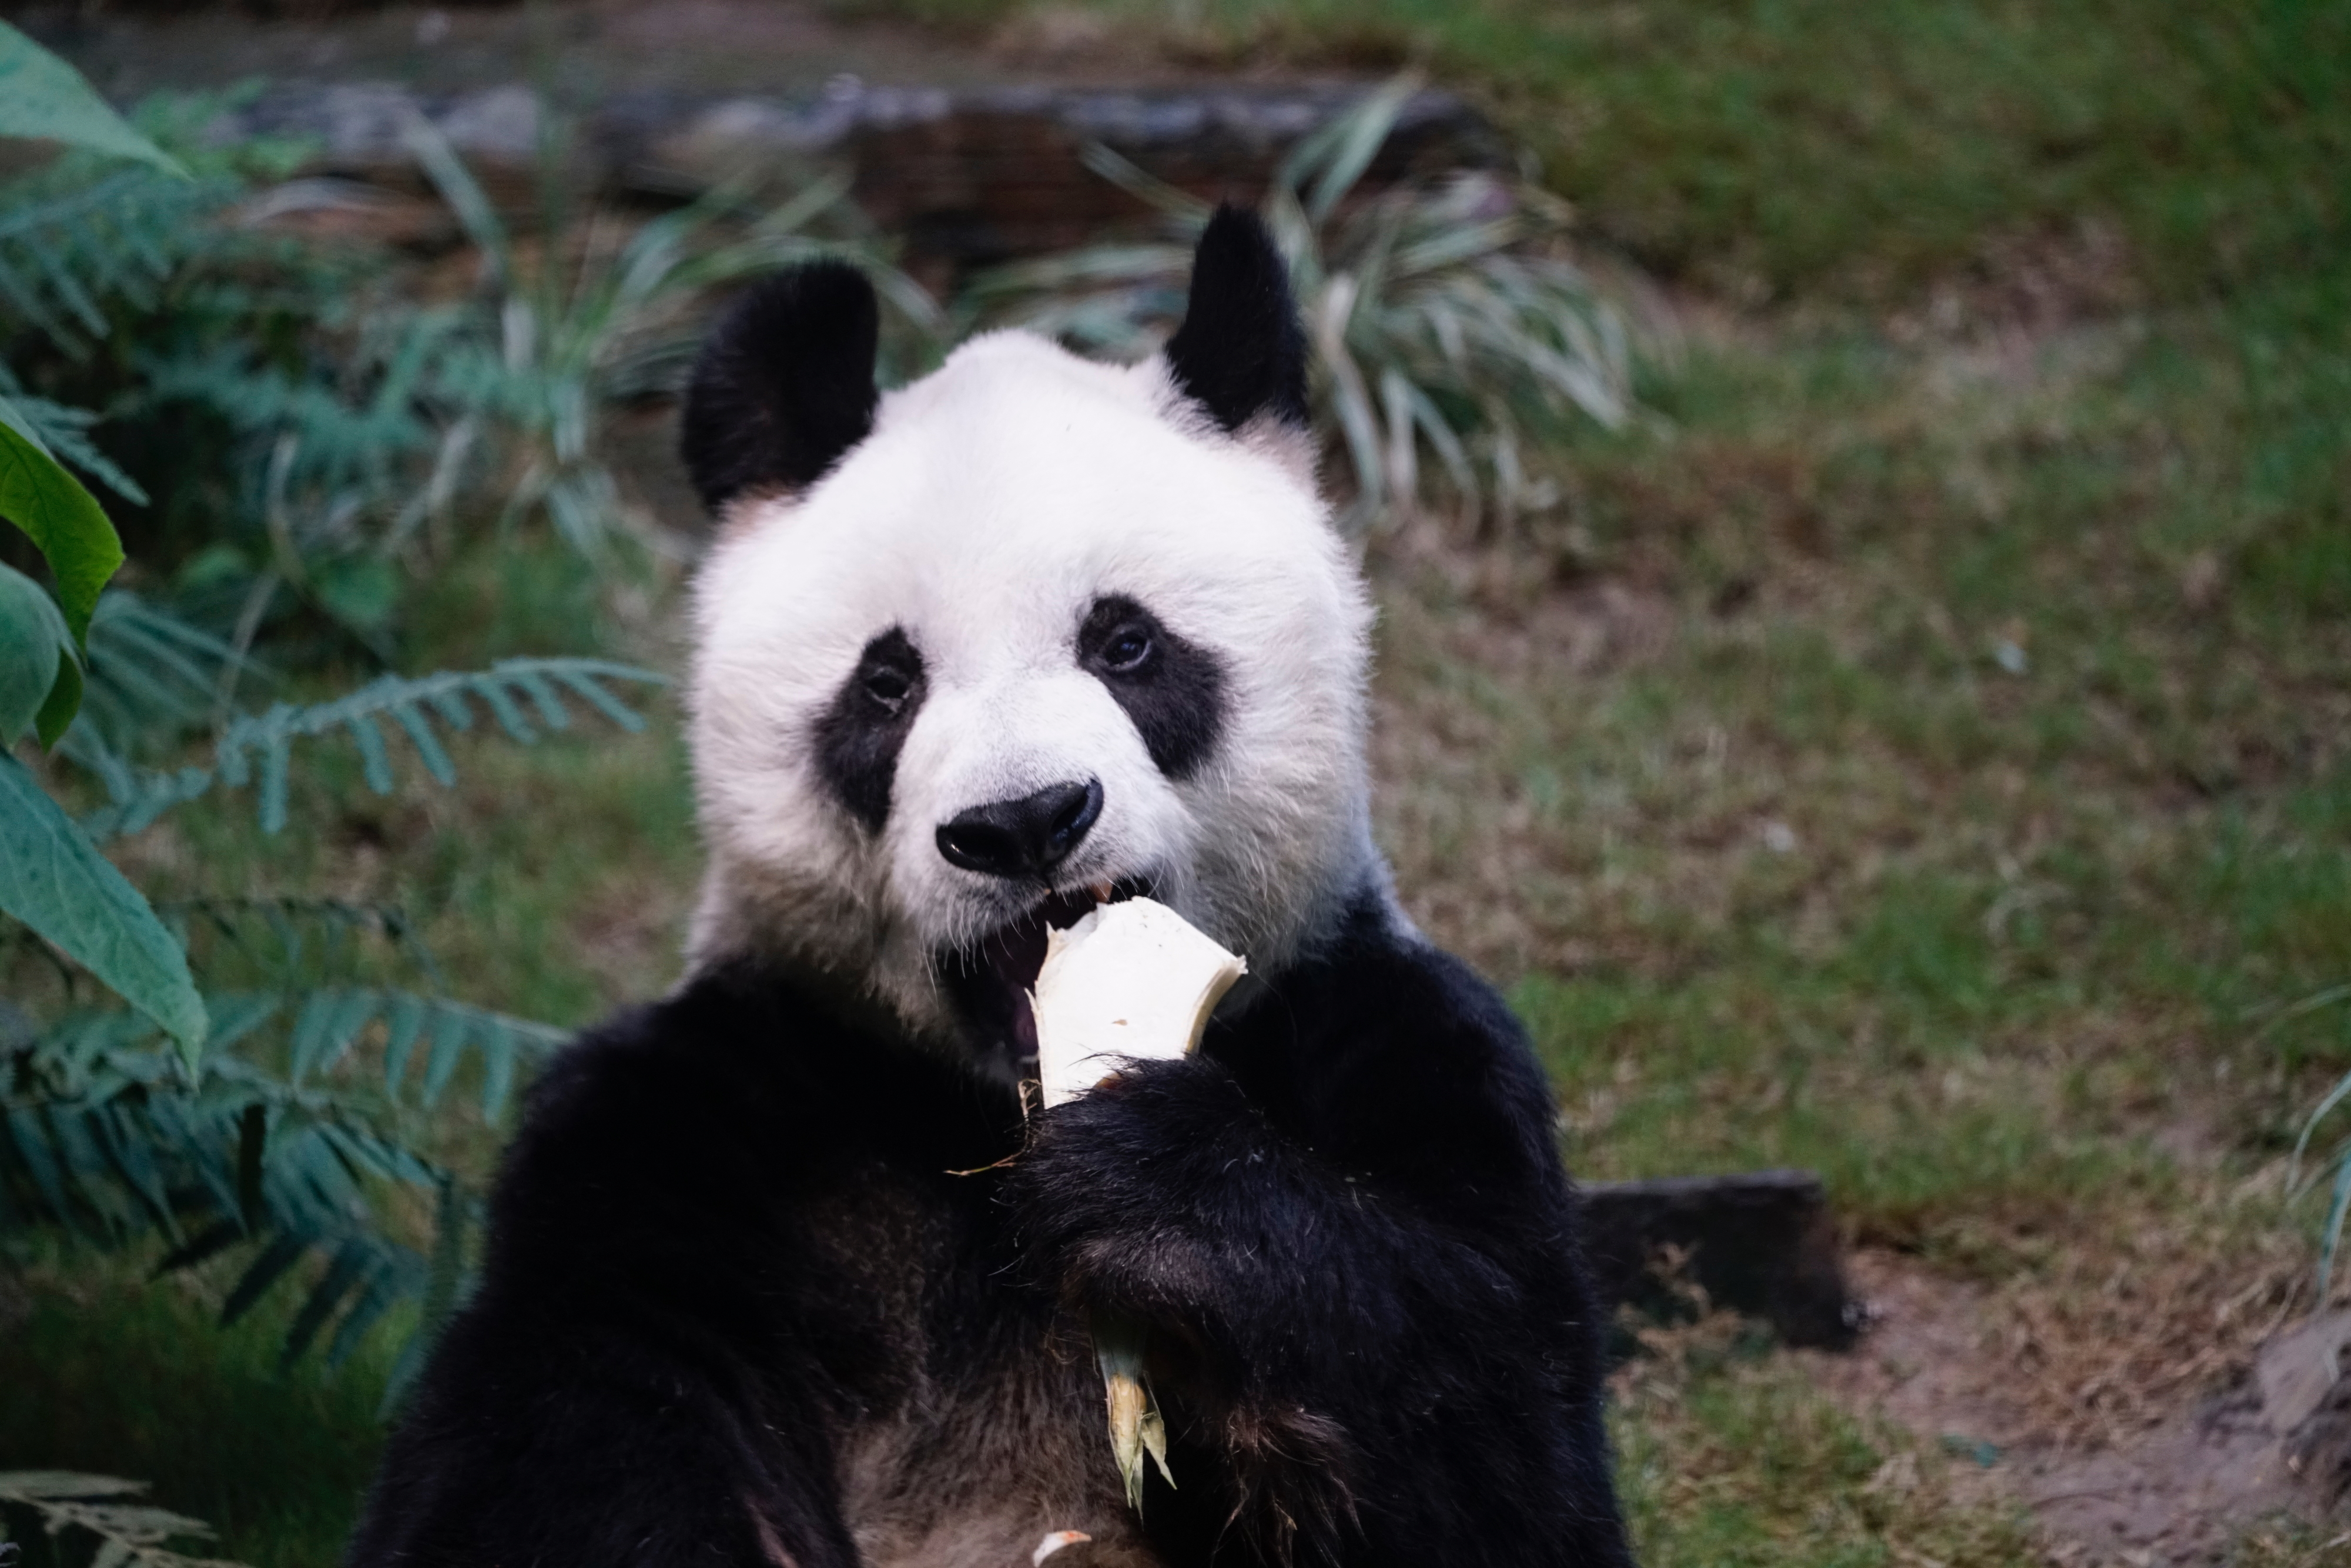 Panda sitting and eating bamboo in a natural habitat enclosure